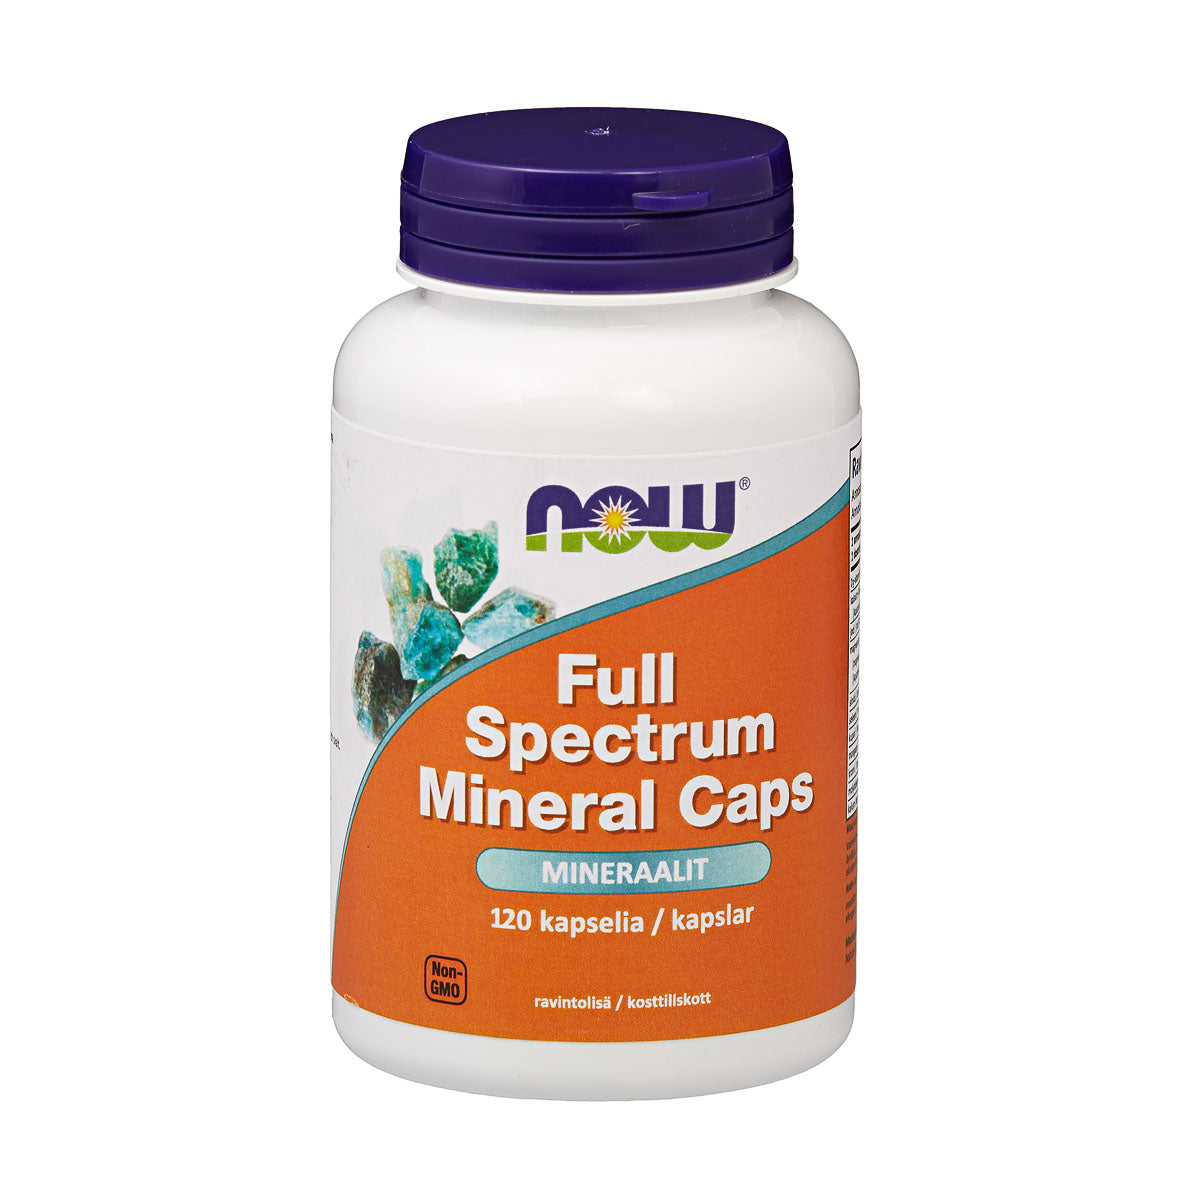 Full Spectrum Mineral Caps (120 kapselia)